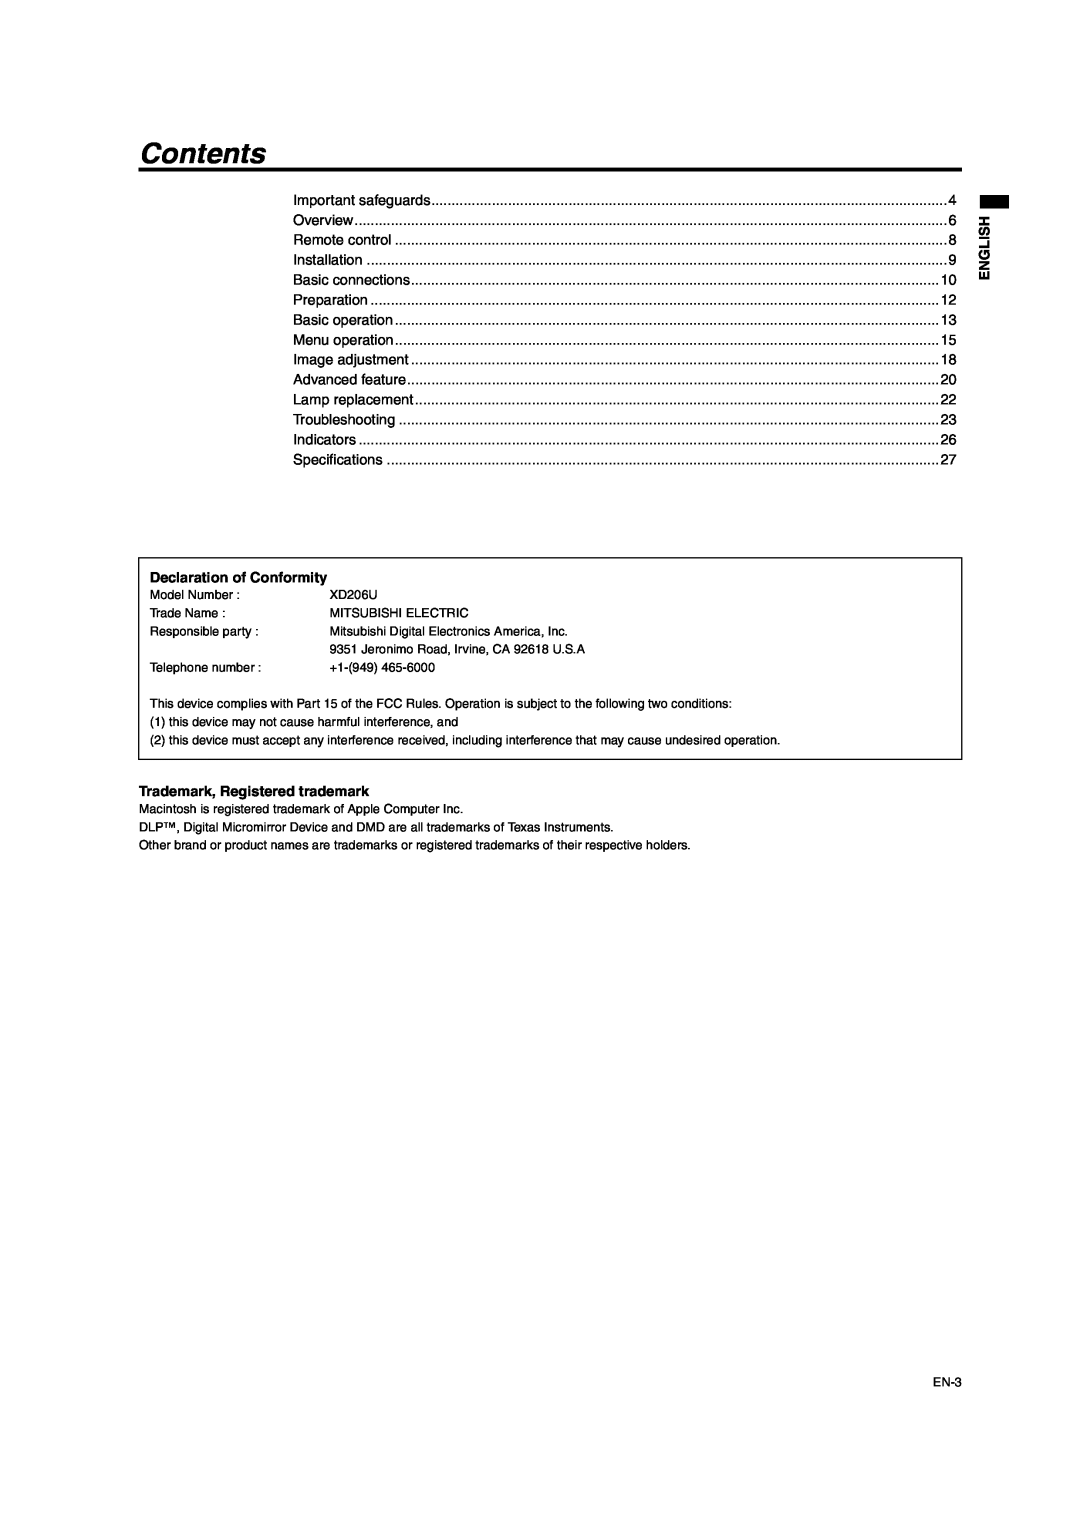 Mitsumi electronic XD206U user manual Contents, Declaration of Conformity, Trademark, Registered trademark, English 